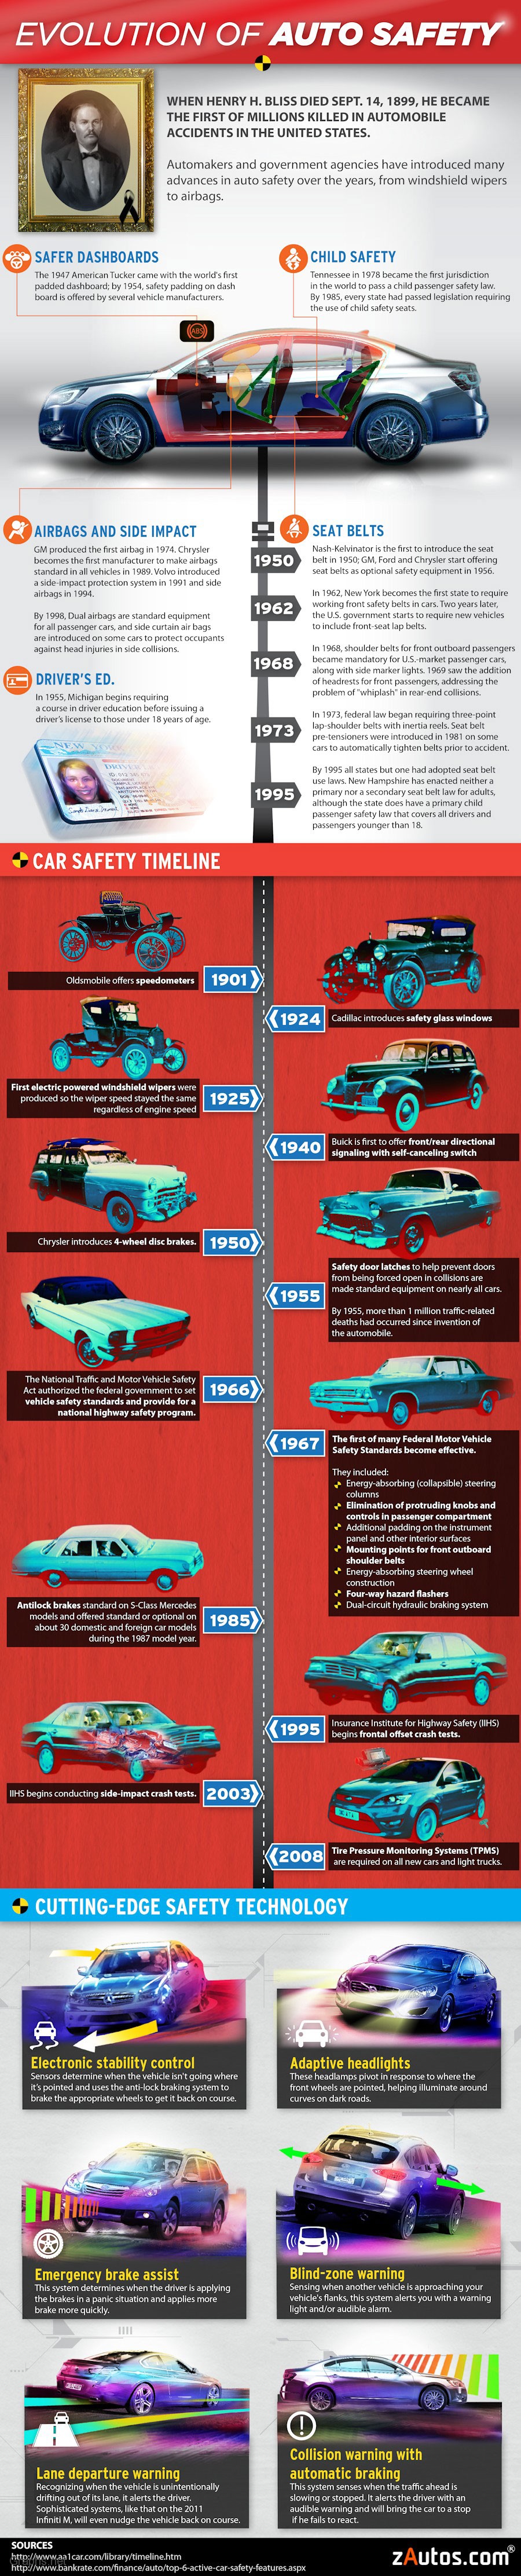 Evolution of auto safety